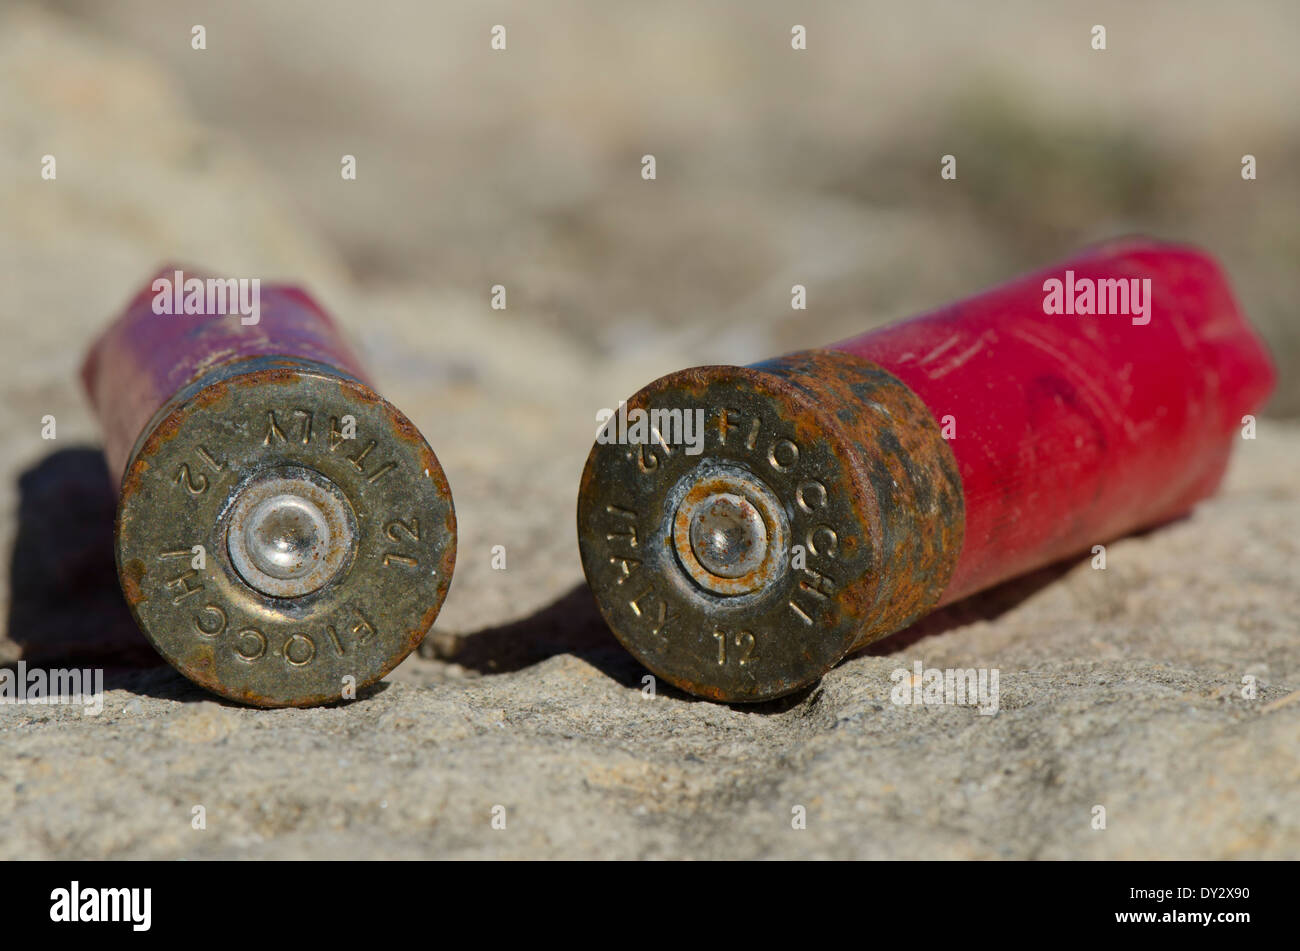 Svuotare i serbatoi shotgun munizioni lasciati da cacciatori in campagna, Spagna. Foto Stock